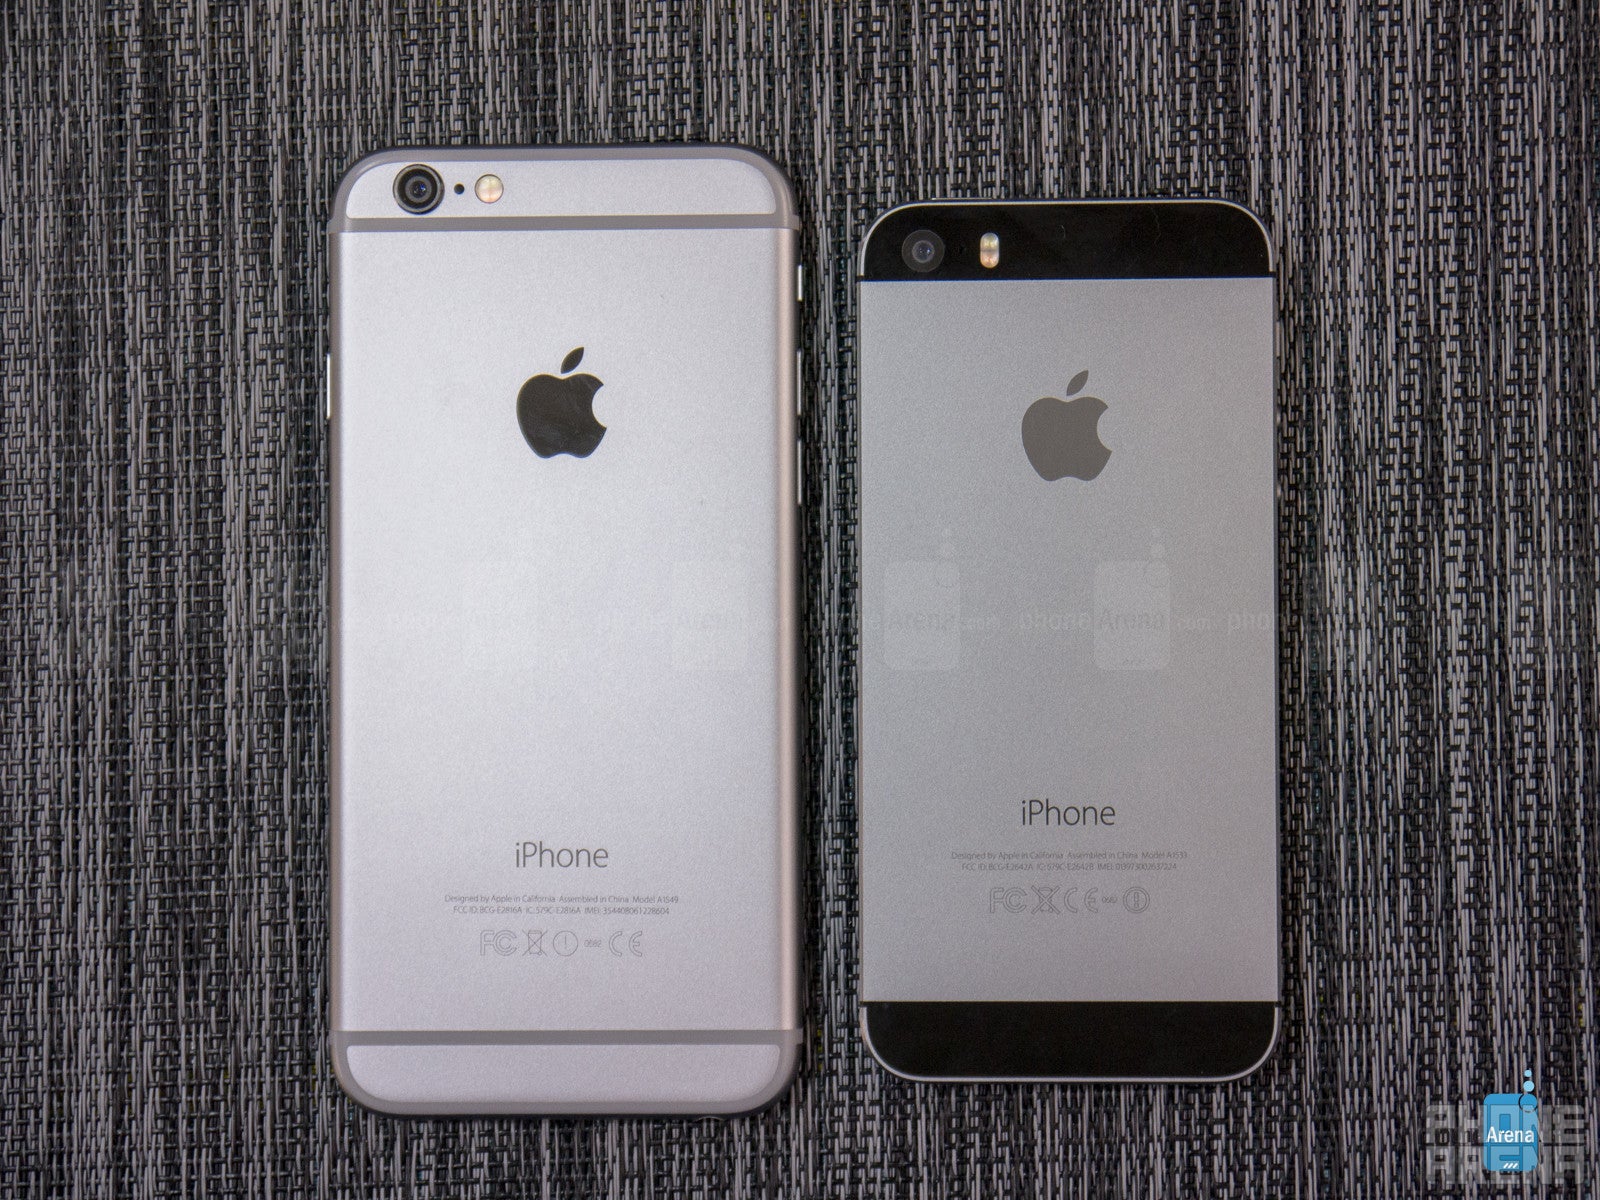 Apple iPhone 6 vs Apple iPhone 5s